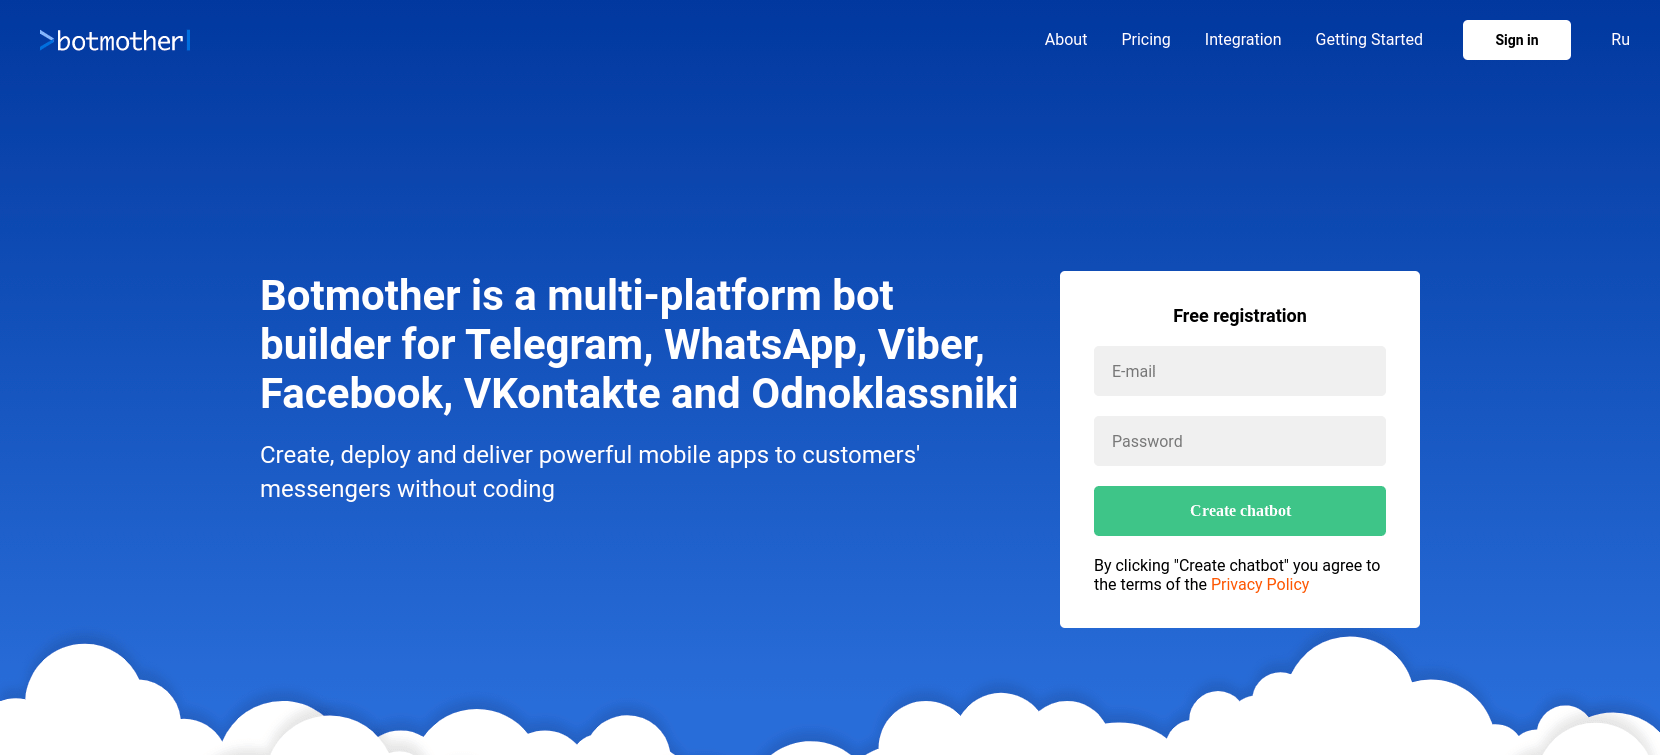 Botmother 聊天機器人網站。